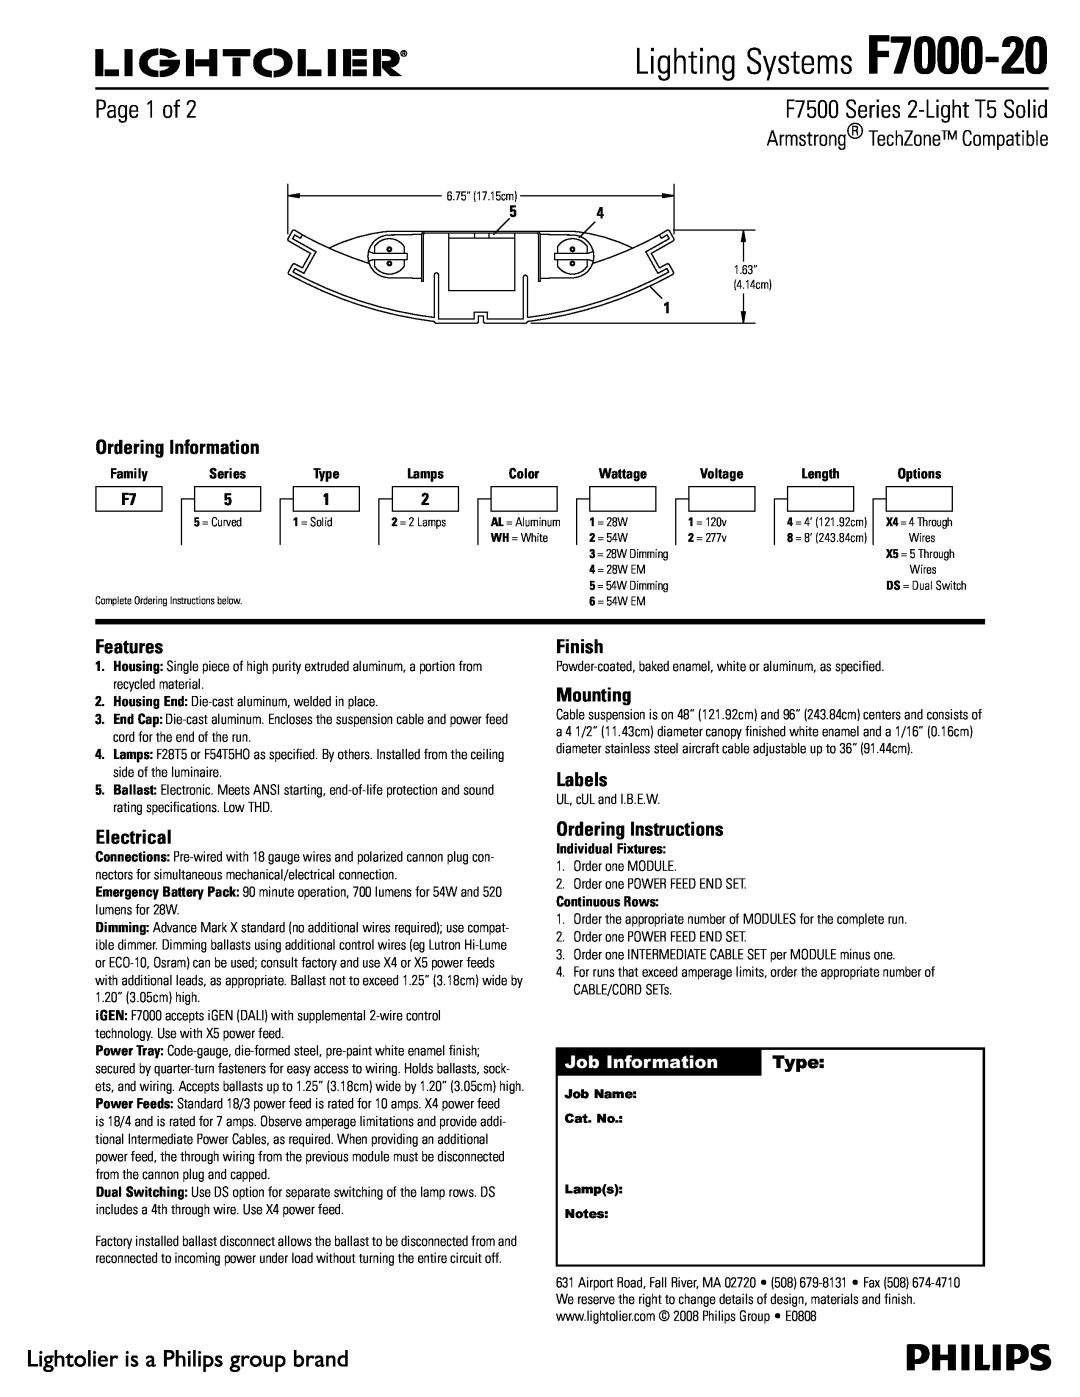 Lightolier specifications 4FSJFT-JHIU54PMJE, Job Information, Type, Lighting Systems F7000-20, Features 